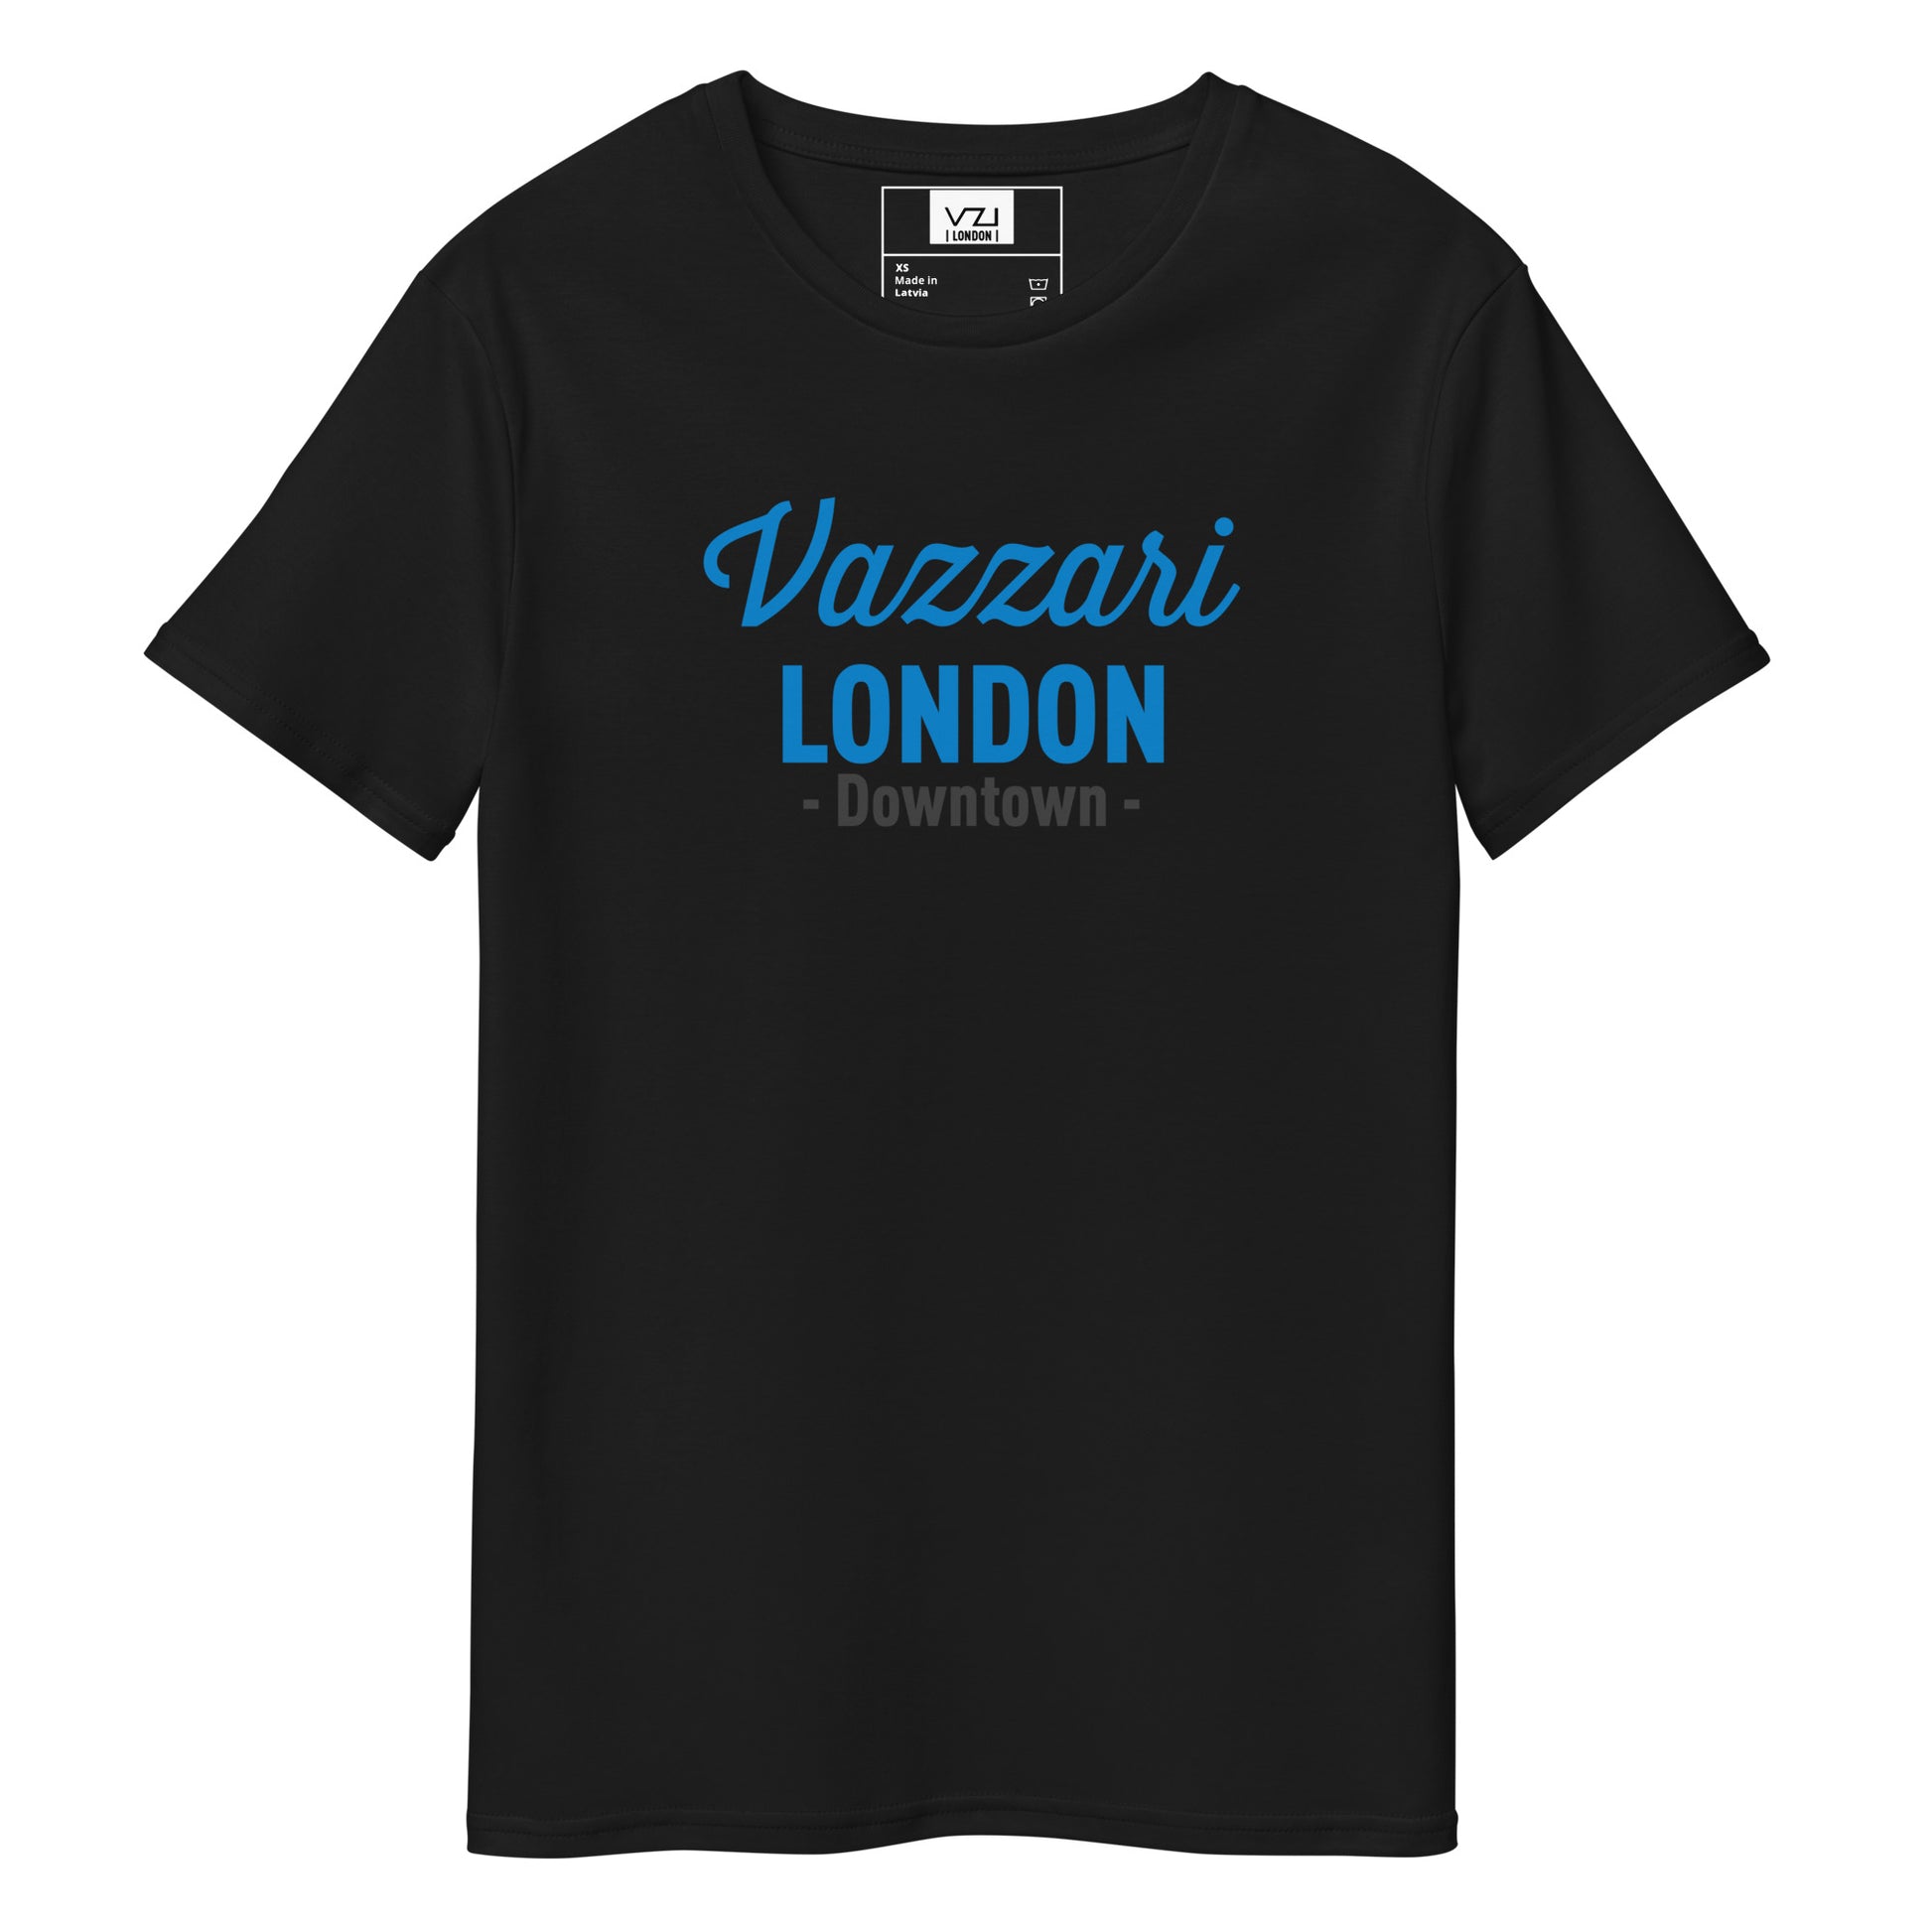 VZI T-SHIRT Downtown LONDON: T-Shirt For Men's - Premium Cotton, Inked Navy Blue